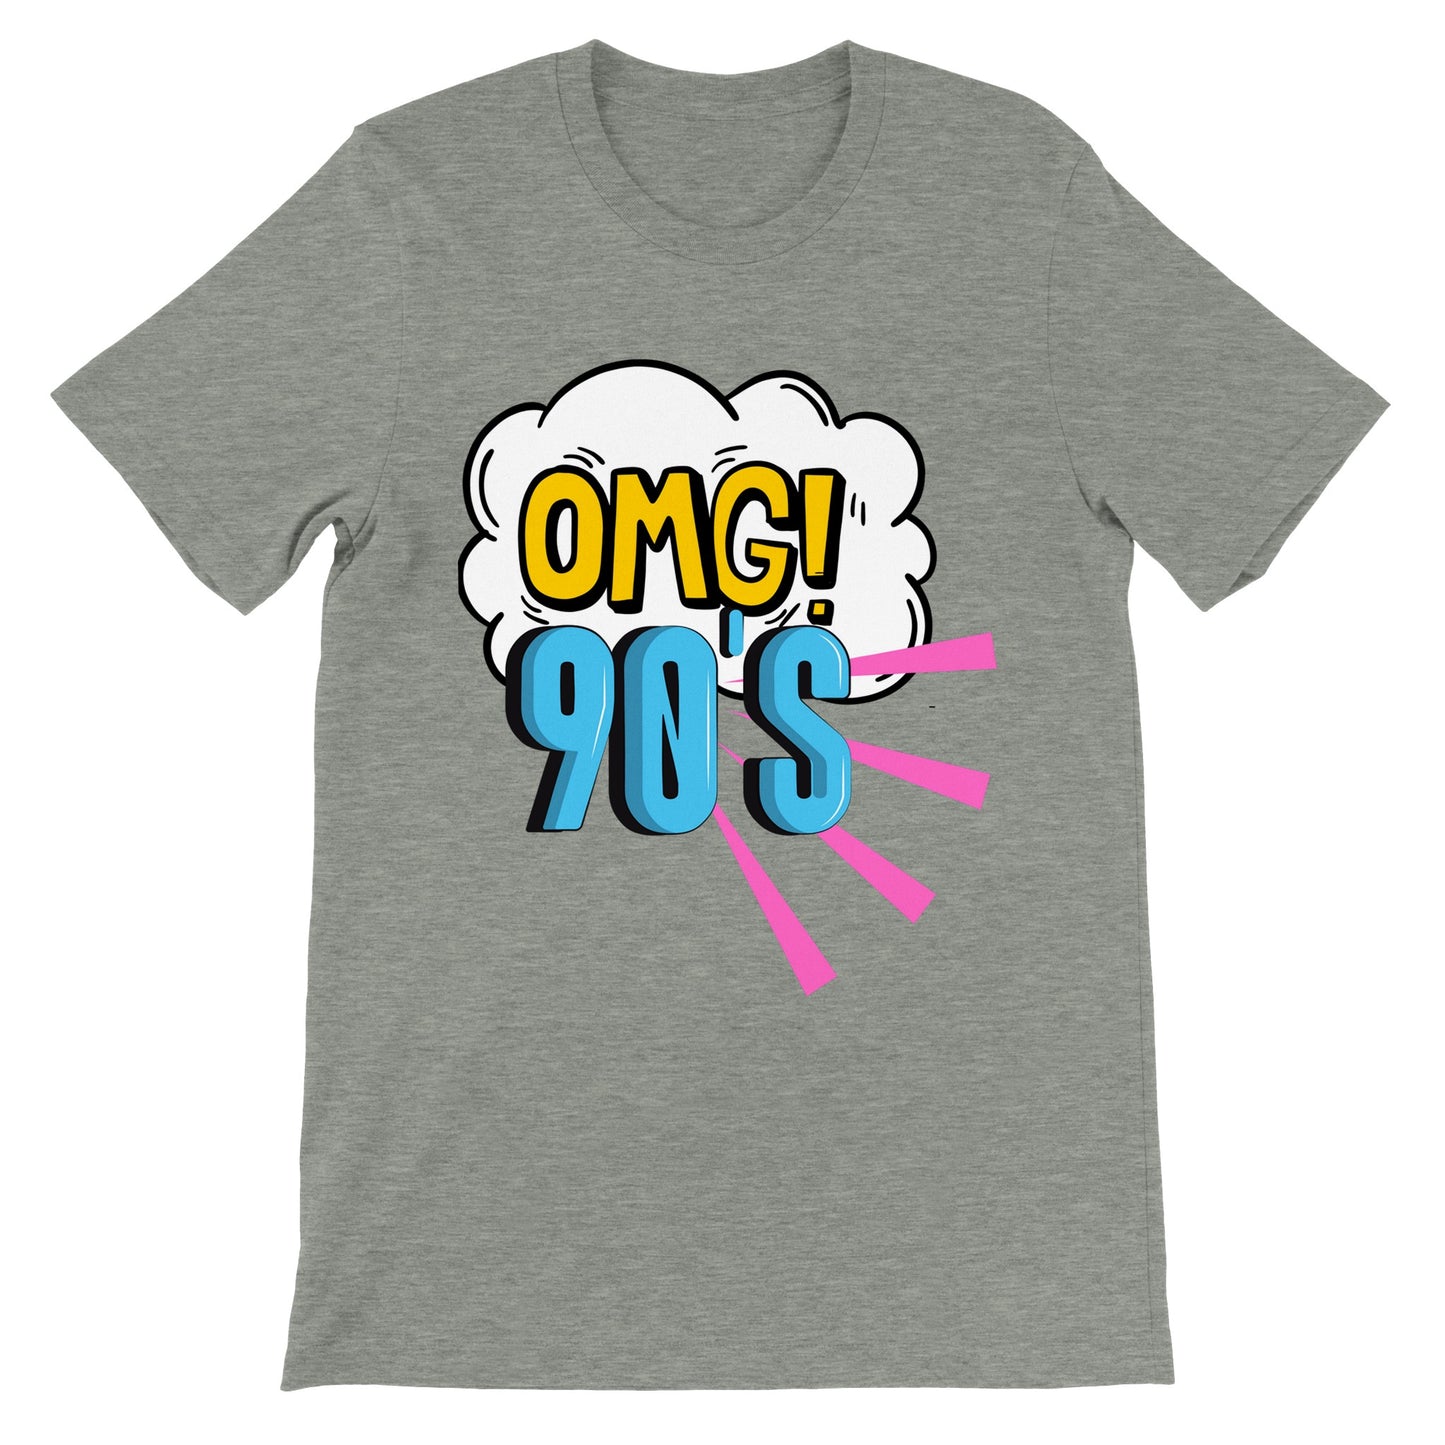 Camiseta gris con diseño pop art